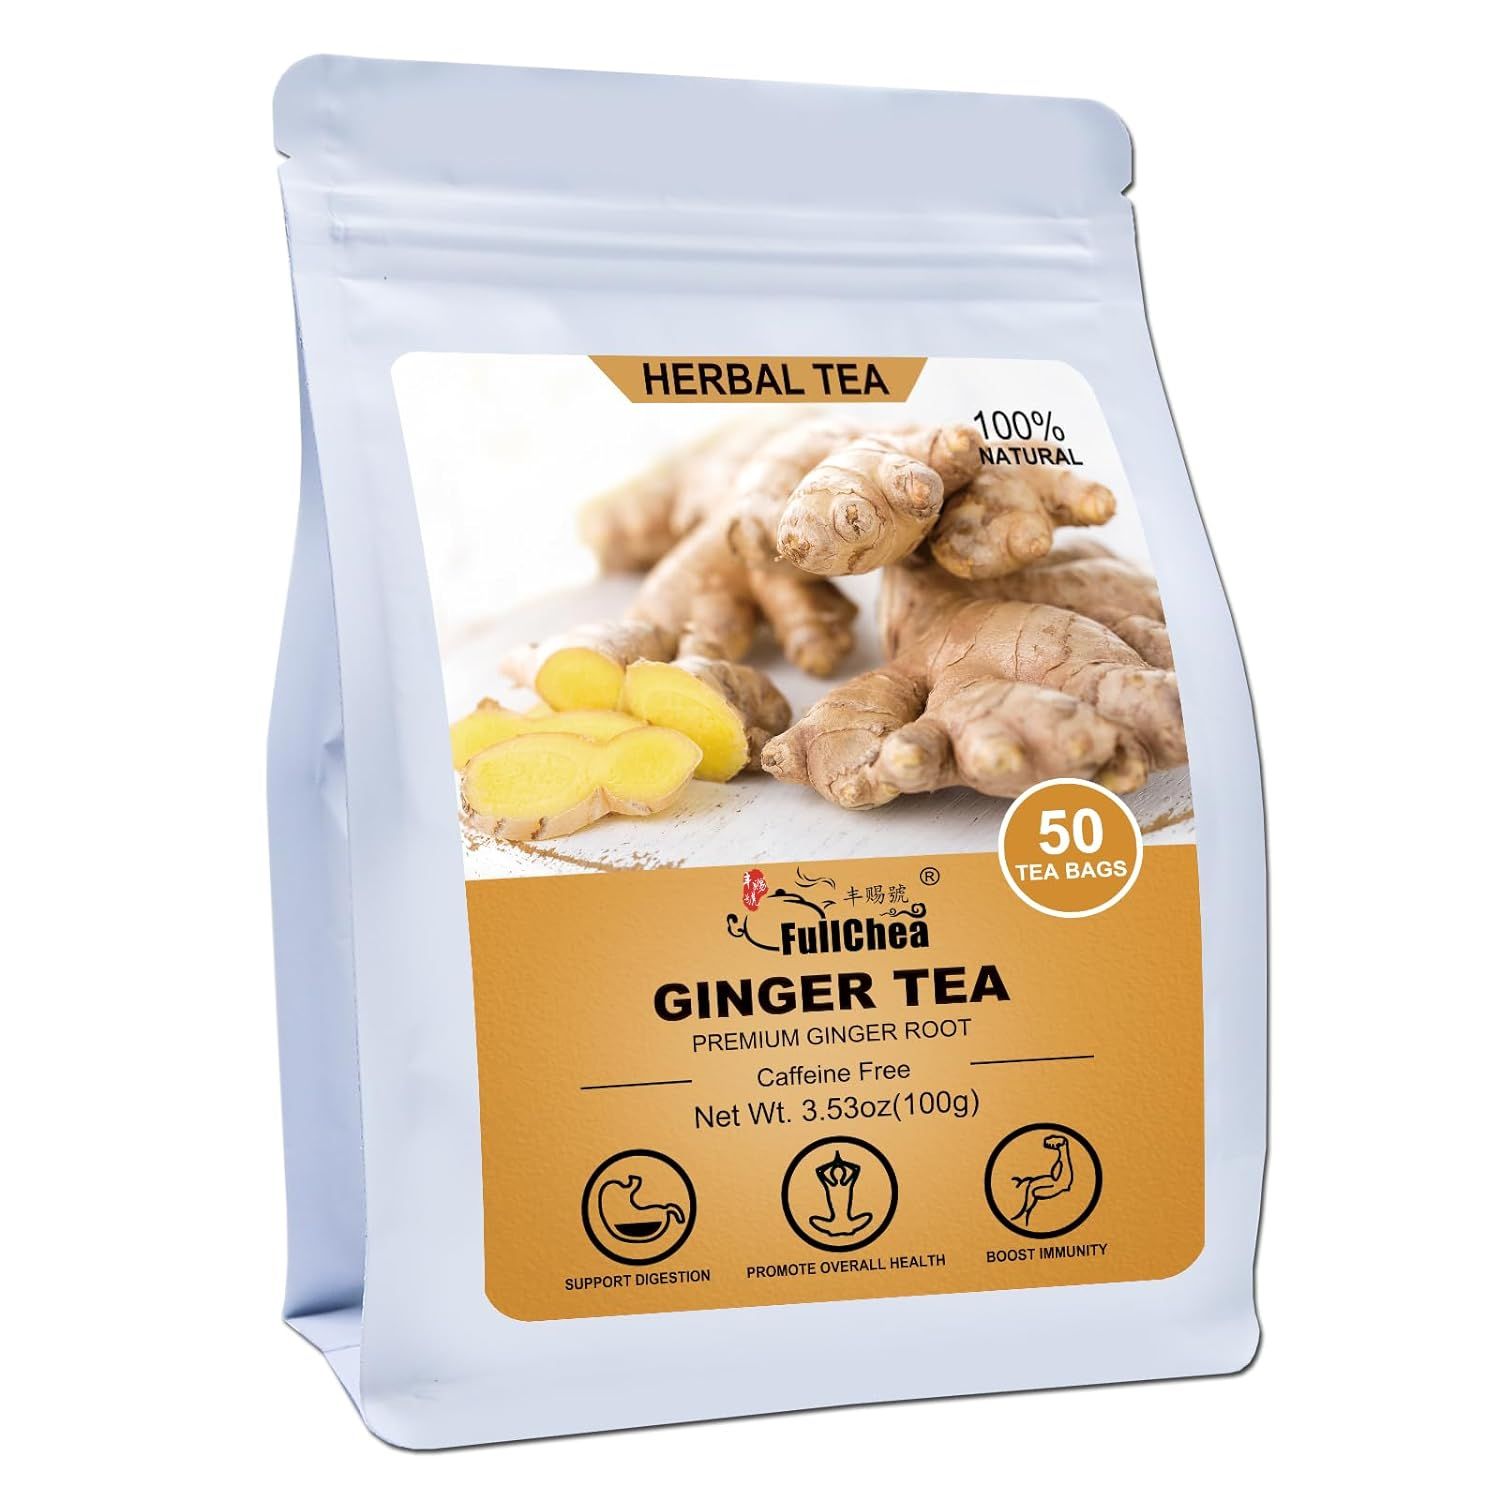 FullChea- Ginger Tea Bags, 50 Teabags, 2g/bag - Premium Ginger Root Tea Bag - Warm & Spicy - Non-... | Amazon (US)